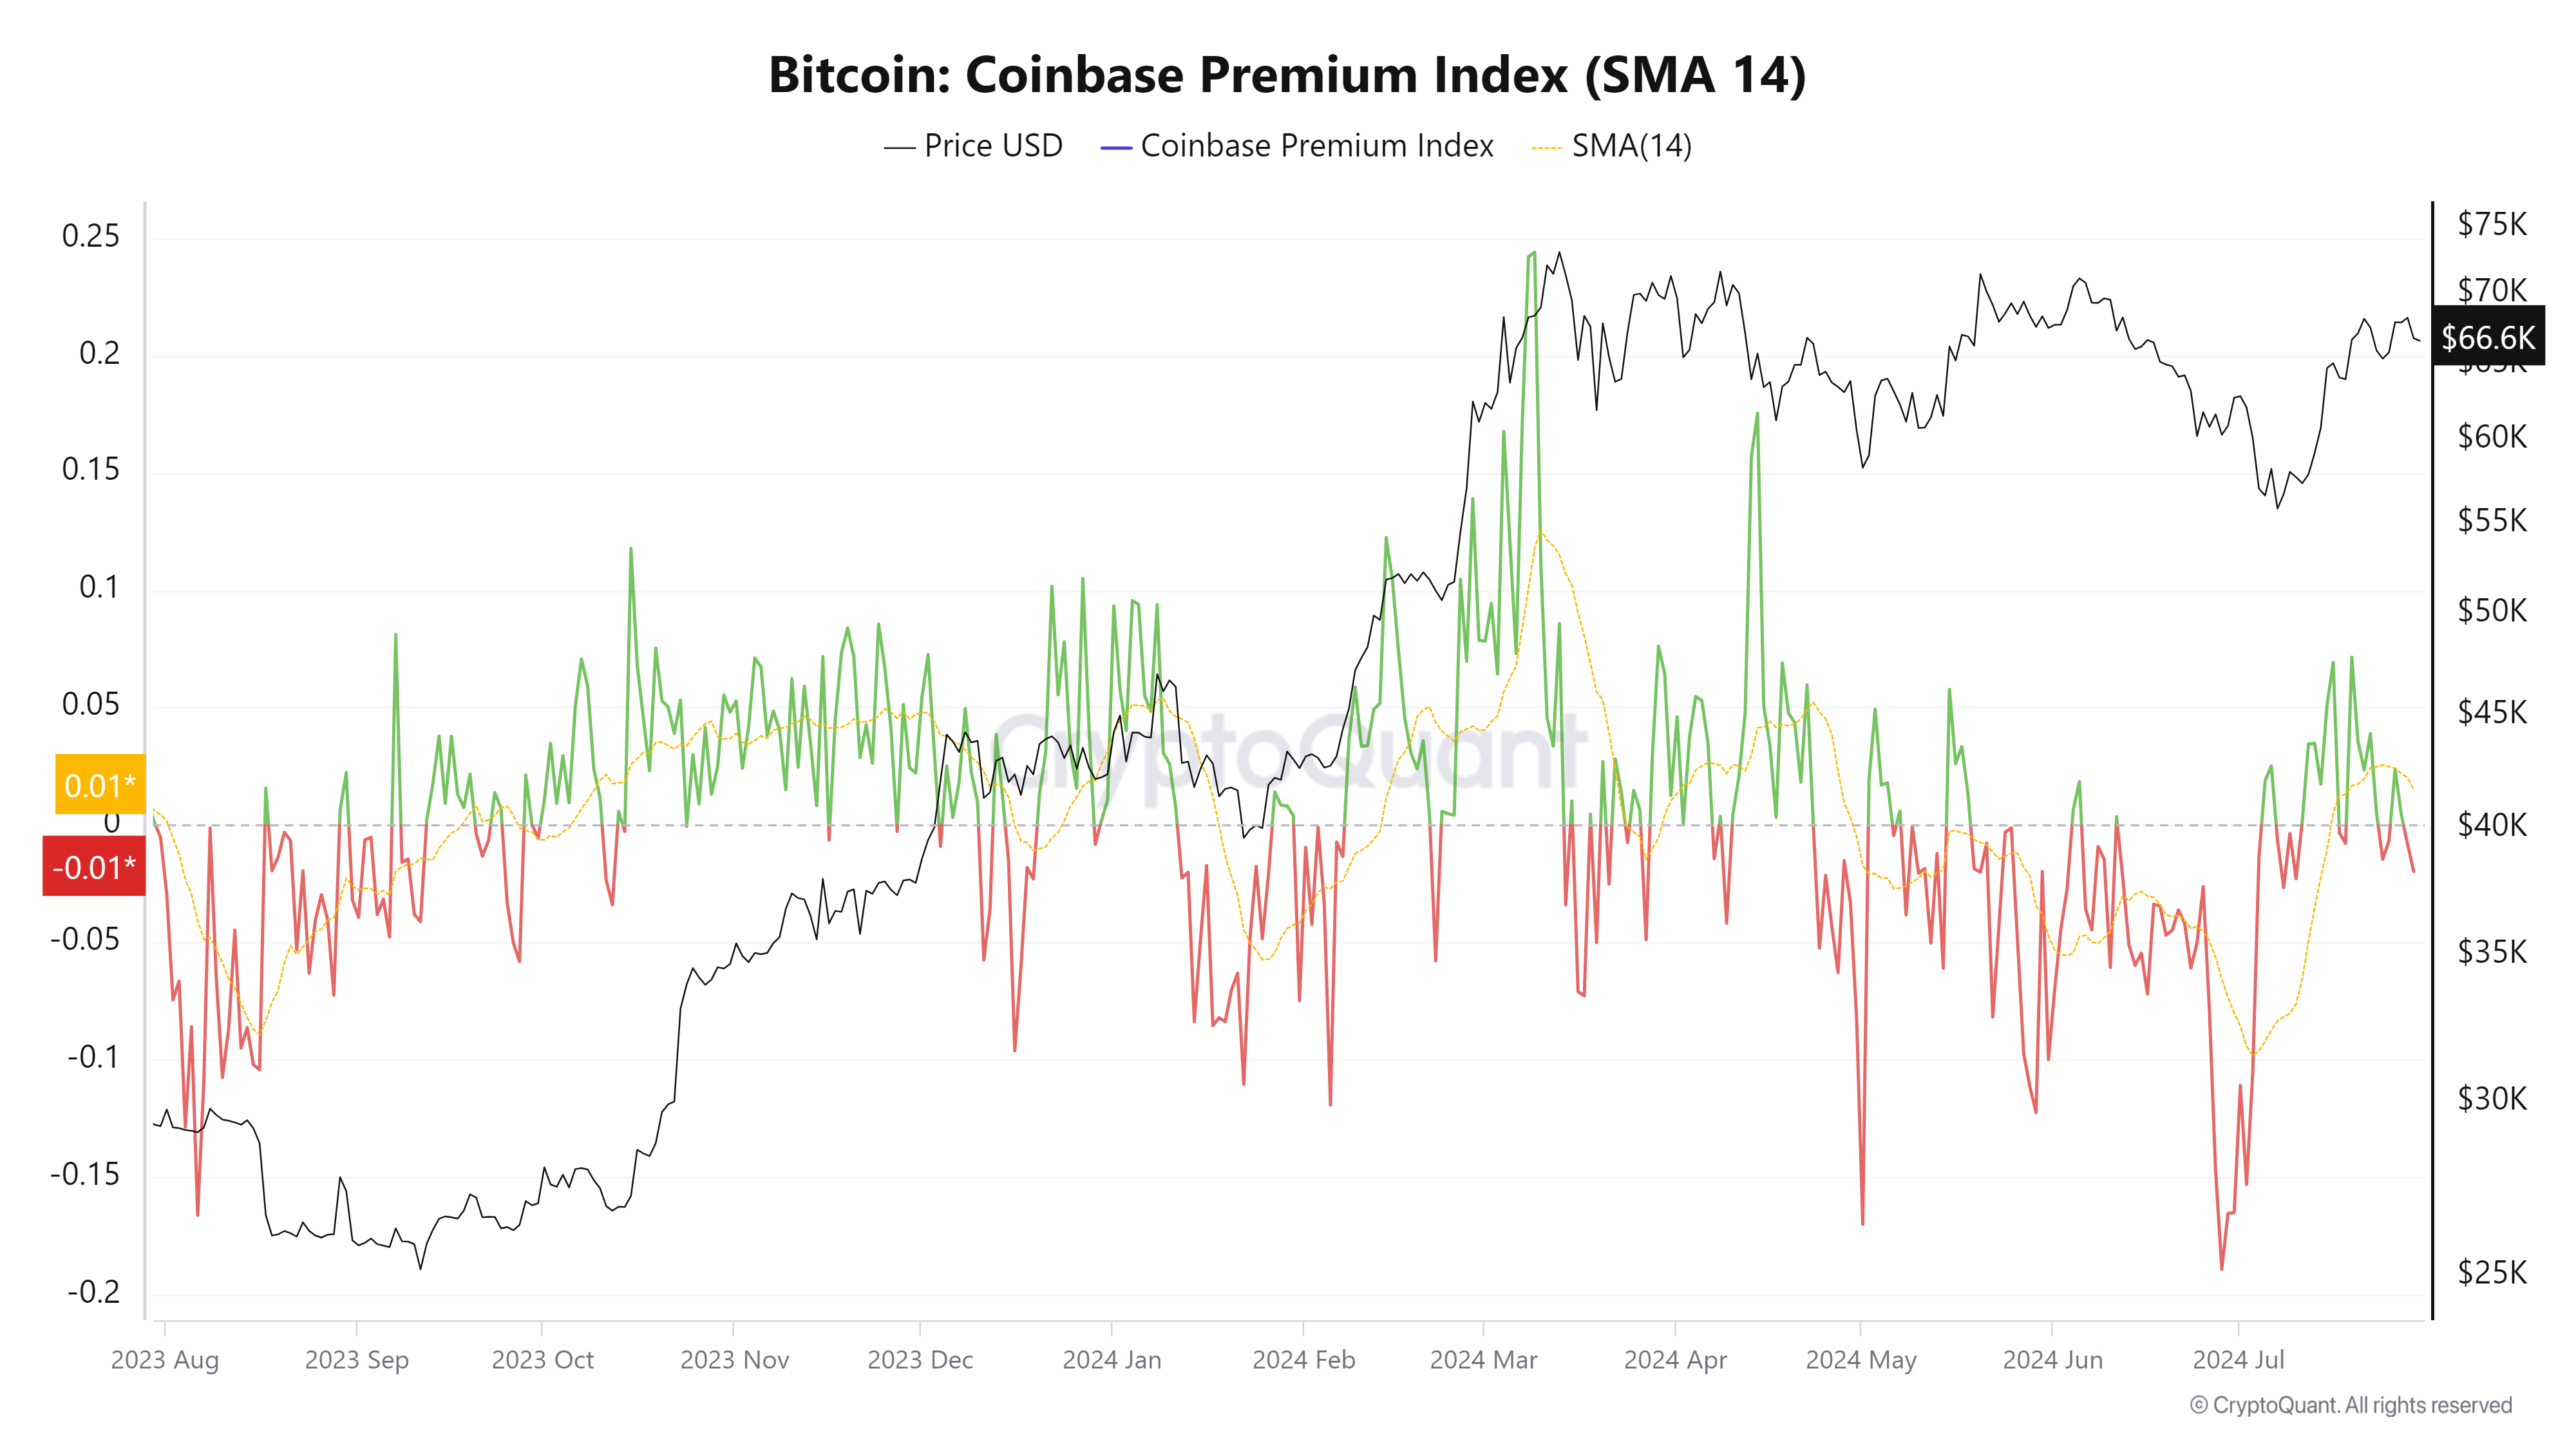 Bitcoin Coinbase Premium Index (SMA 14) chart